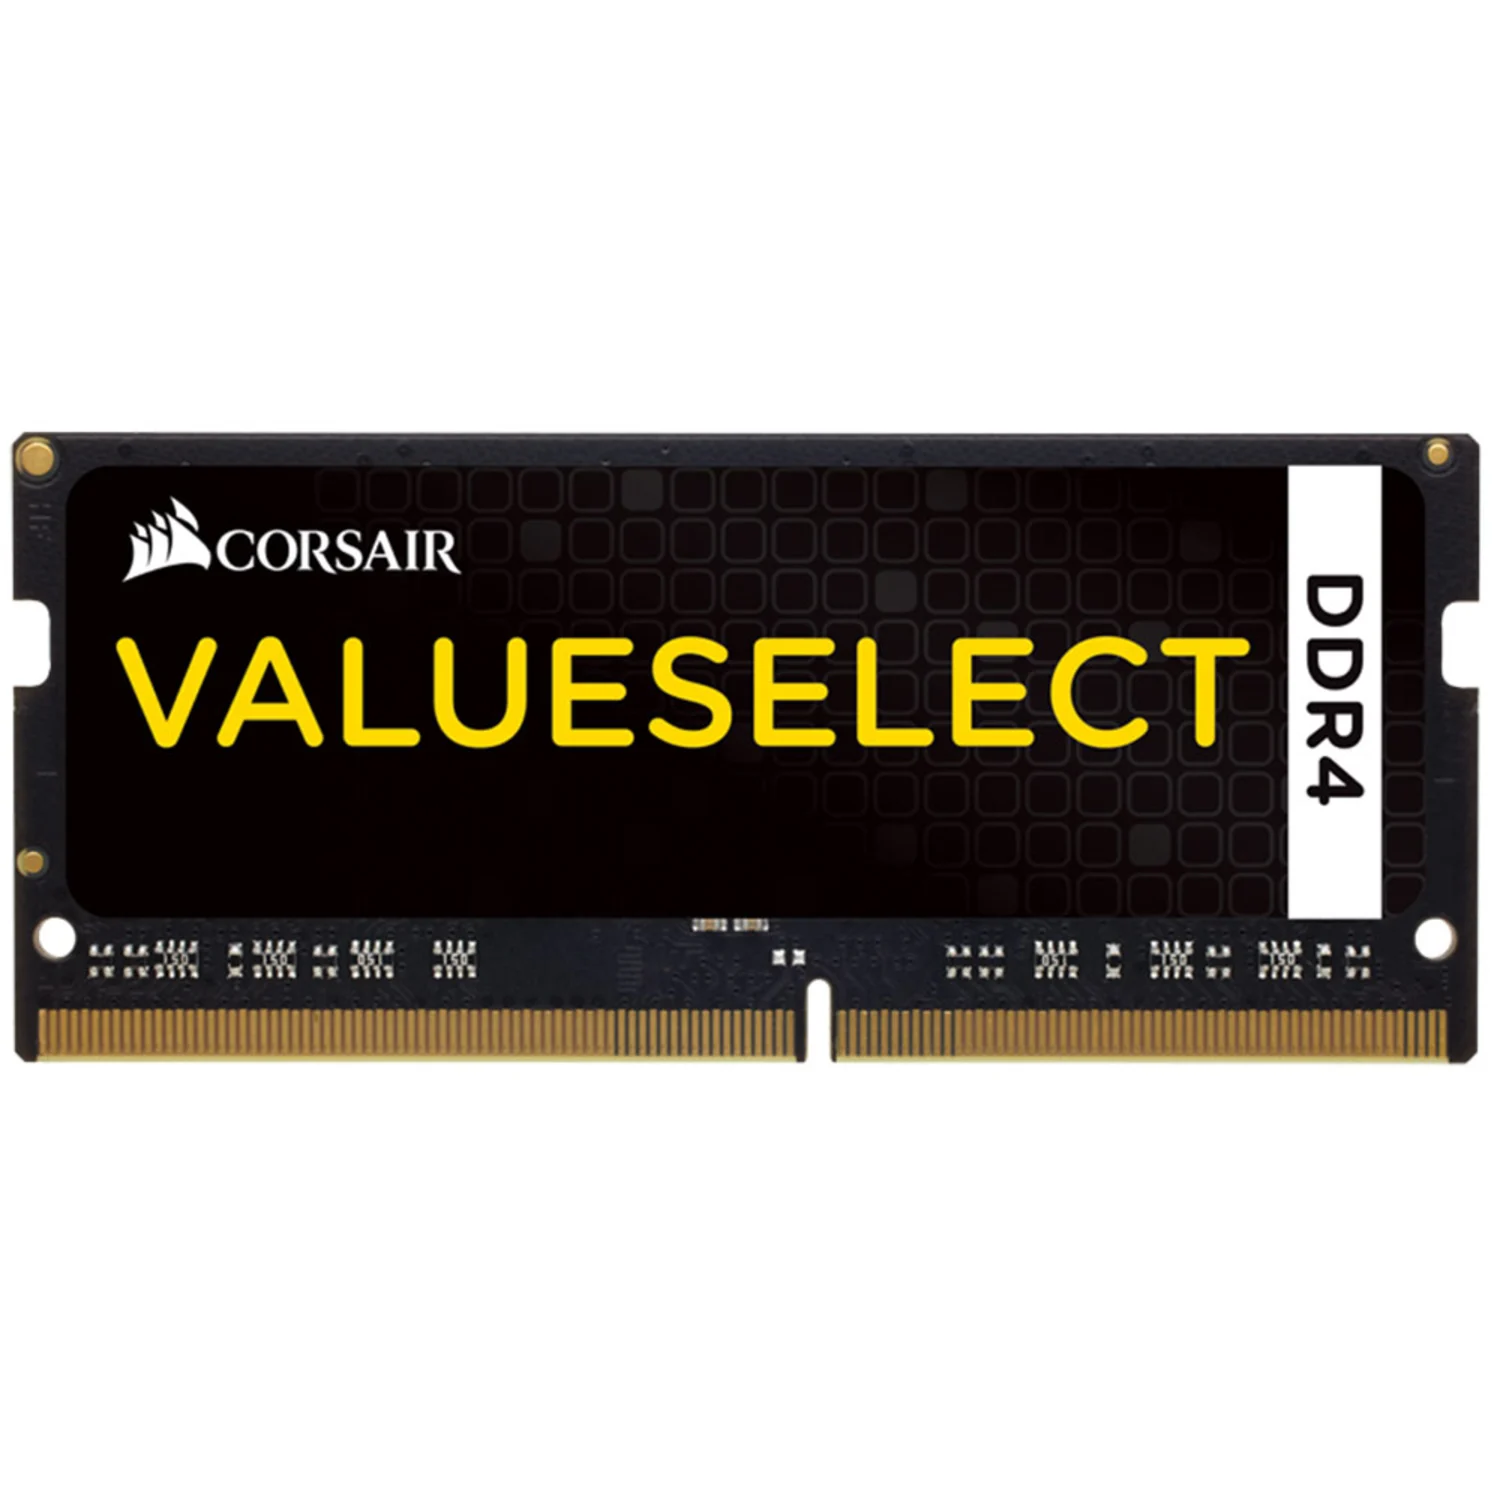 Memoria RAM para Notebook Corsair Valueselect 4GB / DDR4 / 2133MHz / 1x4GB - (CMSO4GX4M1A2133C15)